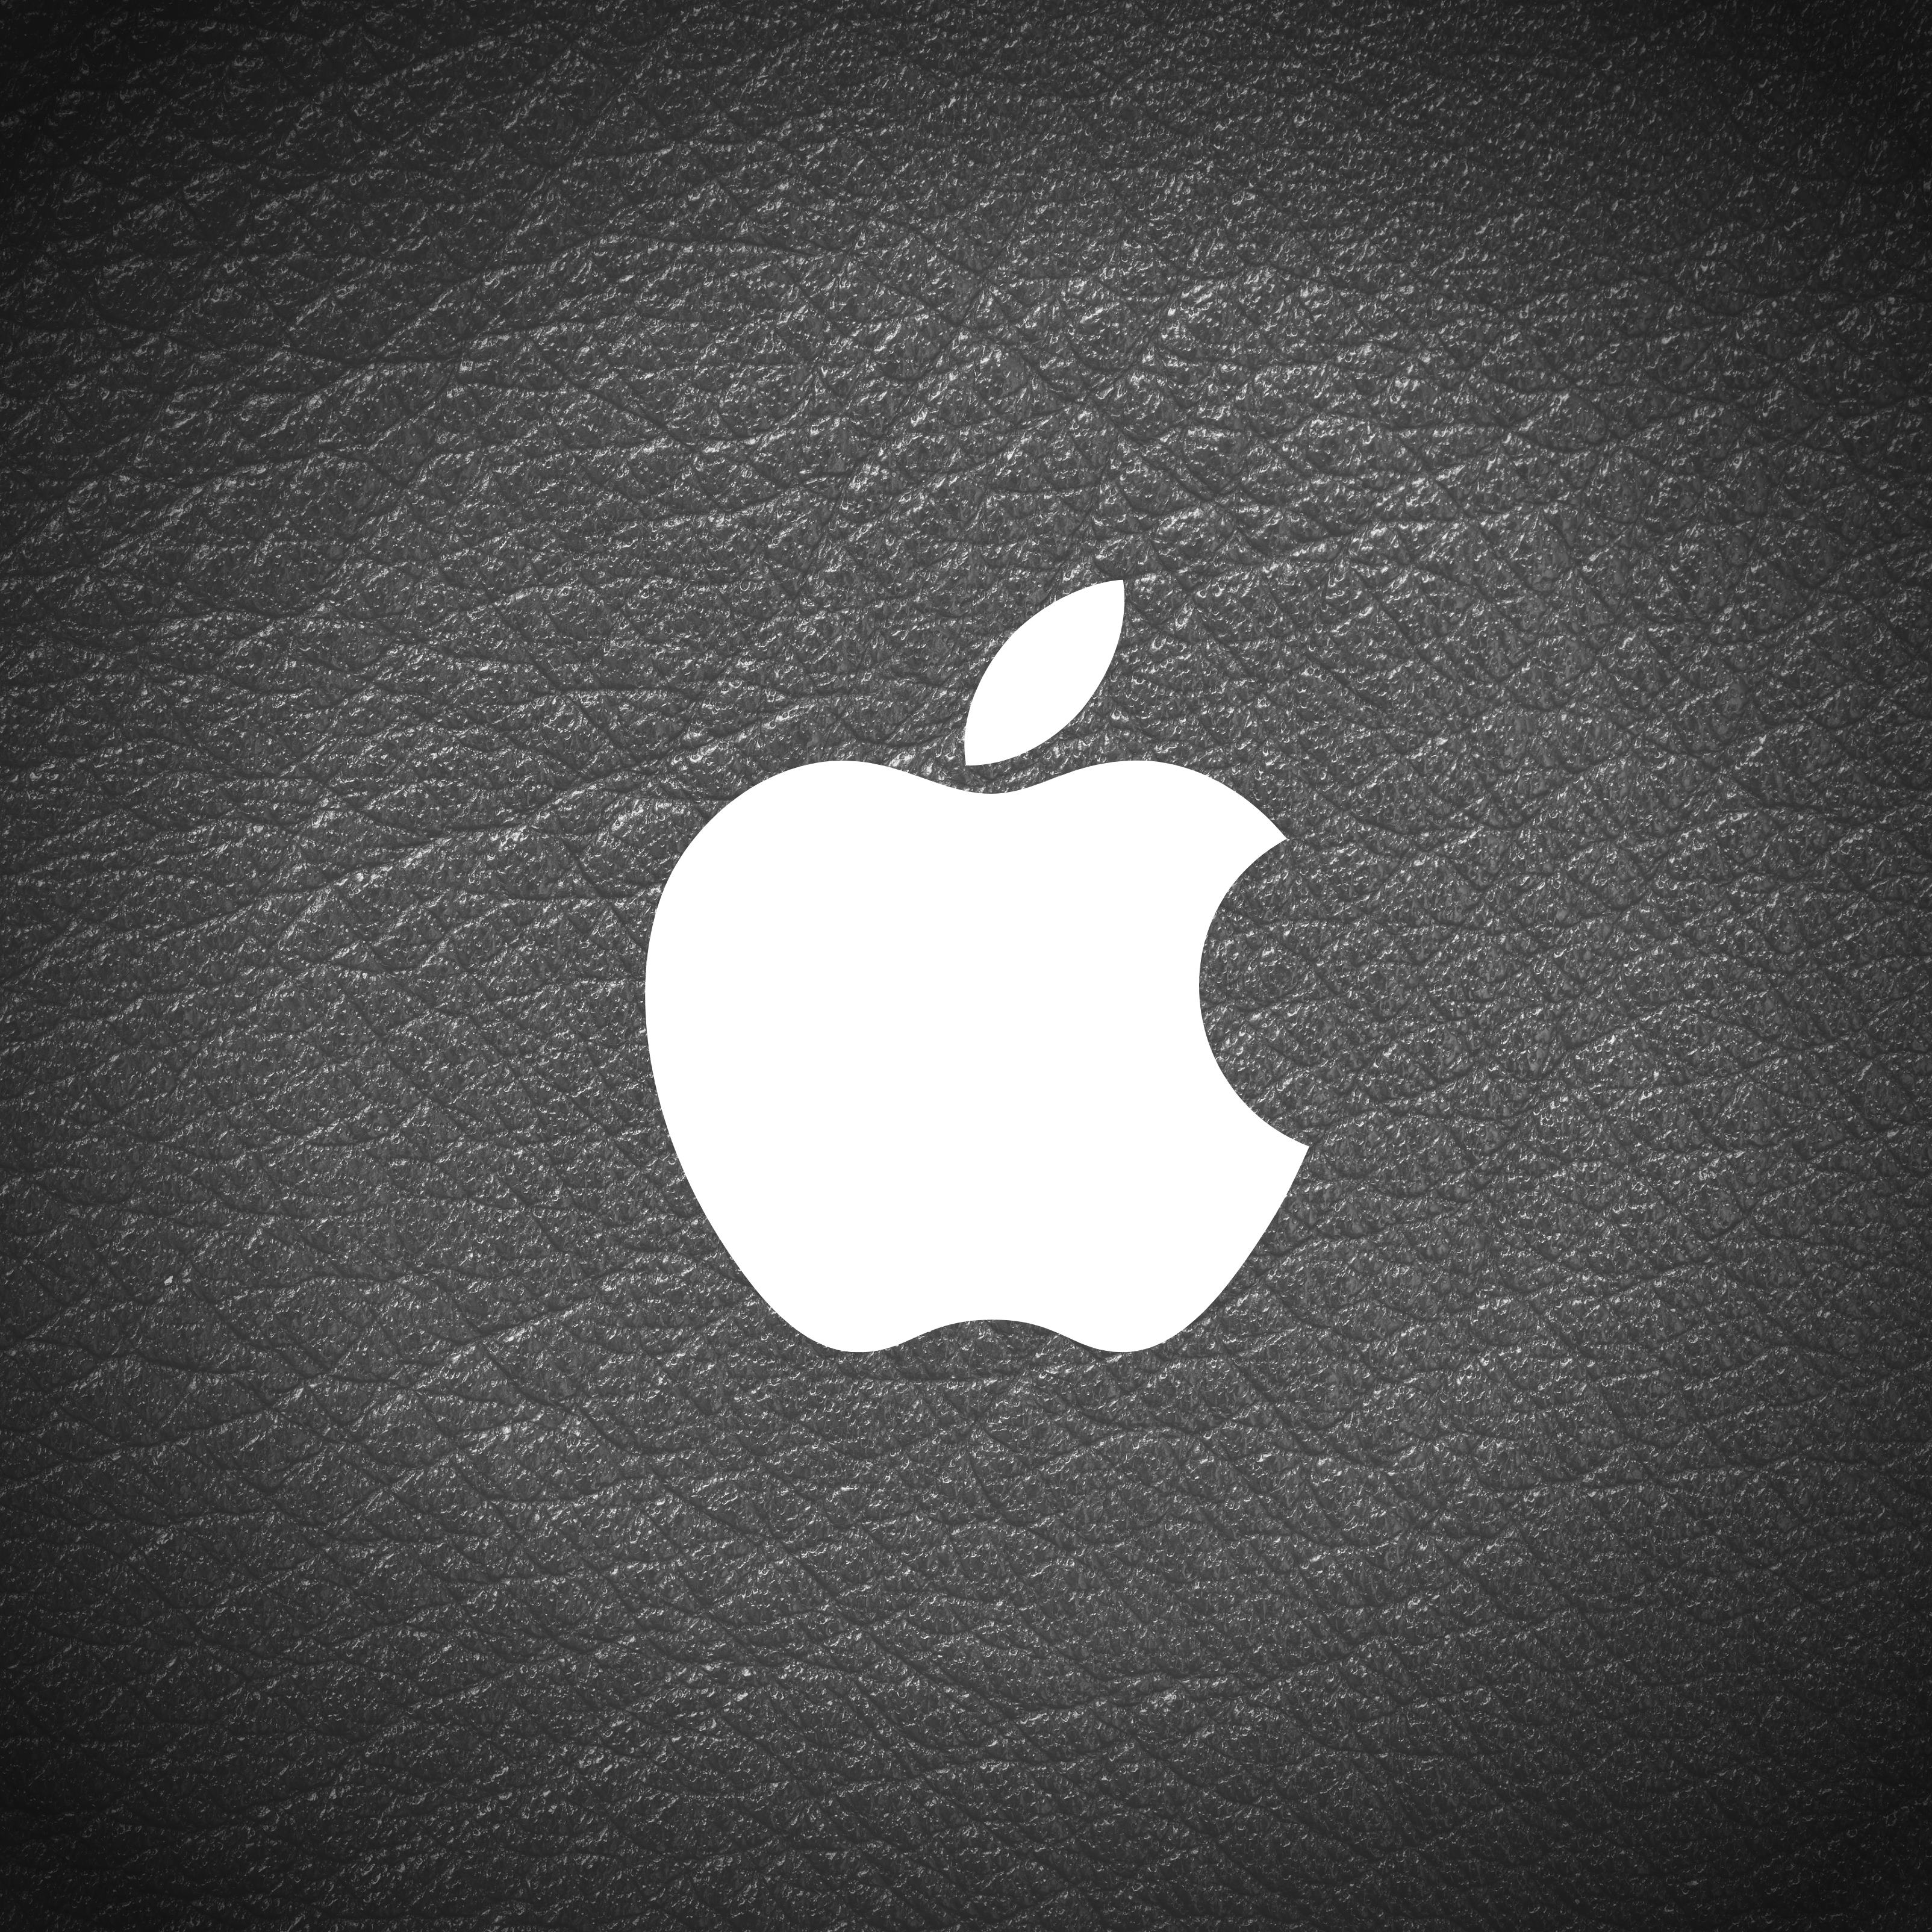 iPad Mini 5 wallpapers Apple Logo Leather Black and White iPad Wallpaper